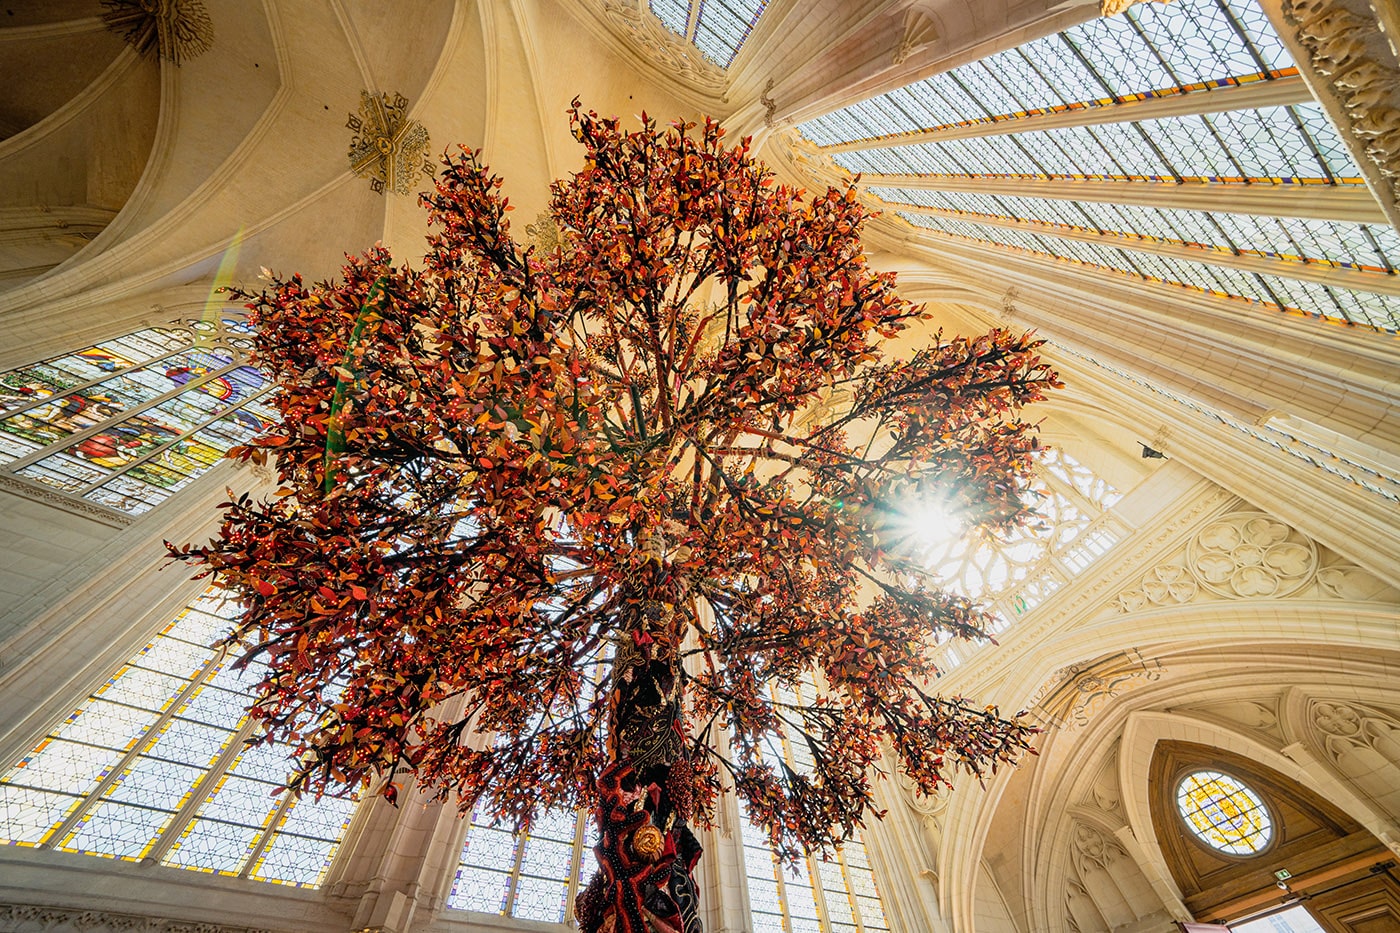 Joana Vasconcelos' impressive Tree of Life at Vincennes castle 3